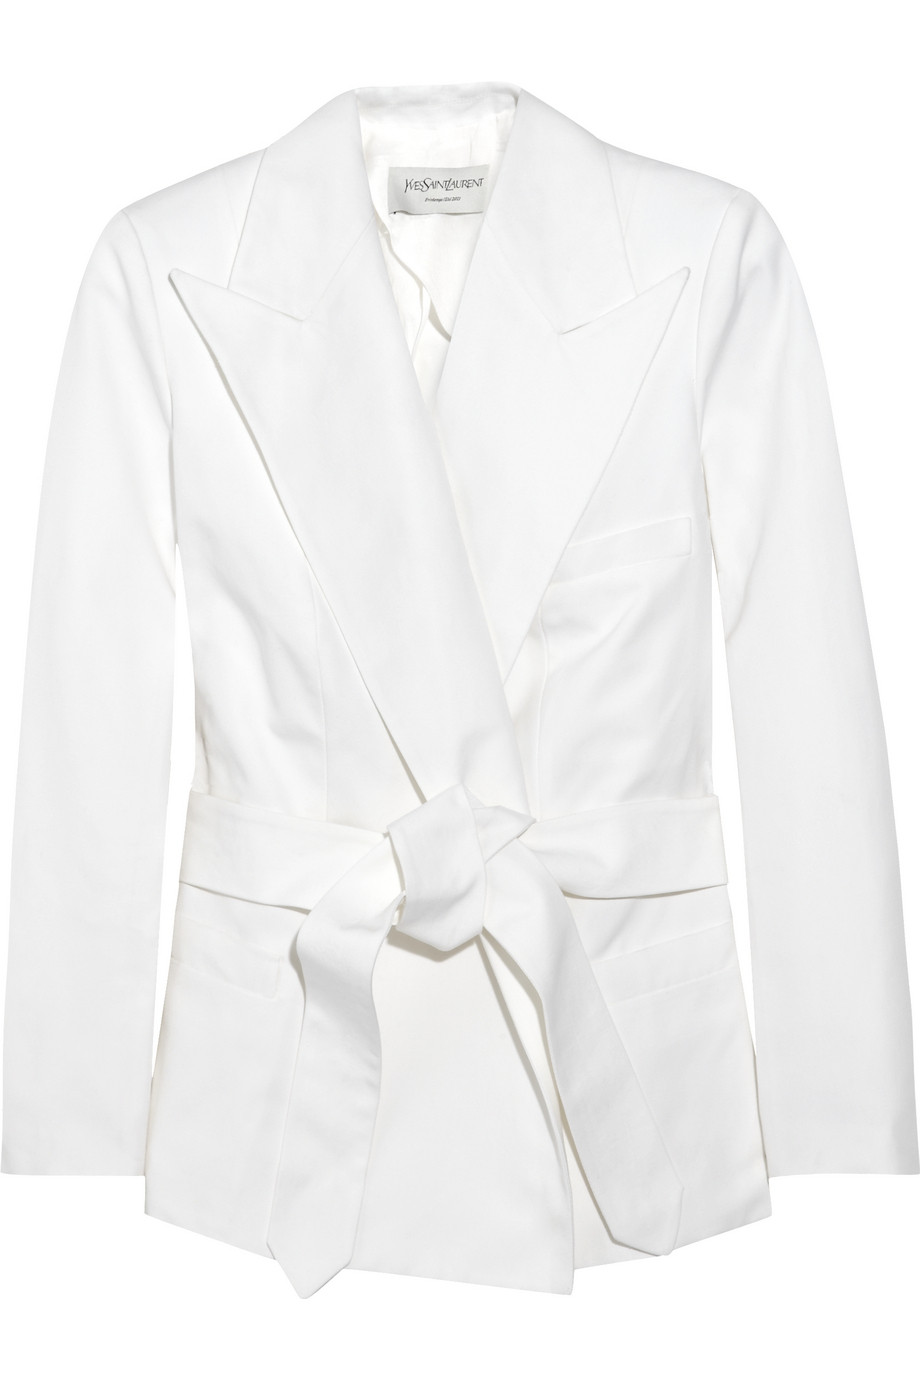 Lyst - Saint laurent Belted Cotton-canvas Jacket in White